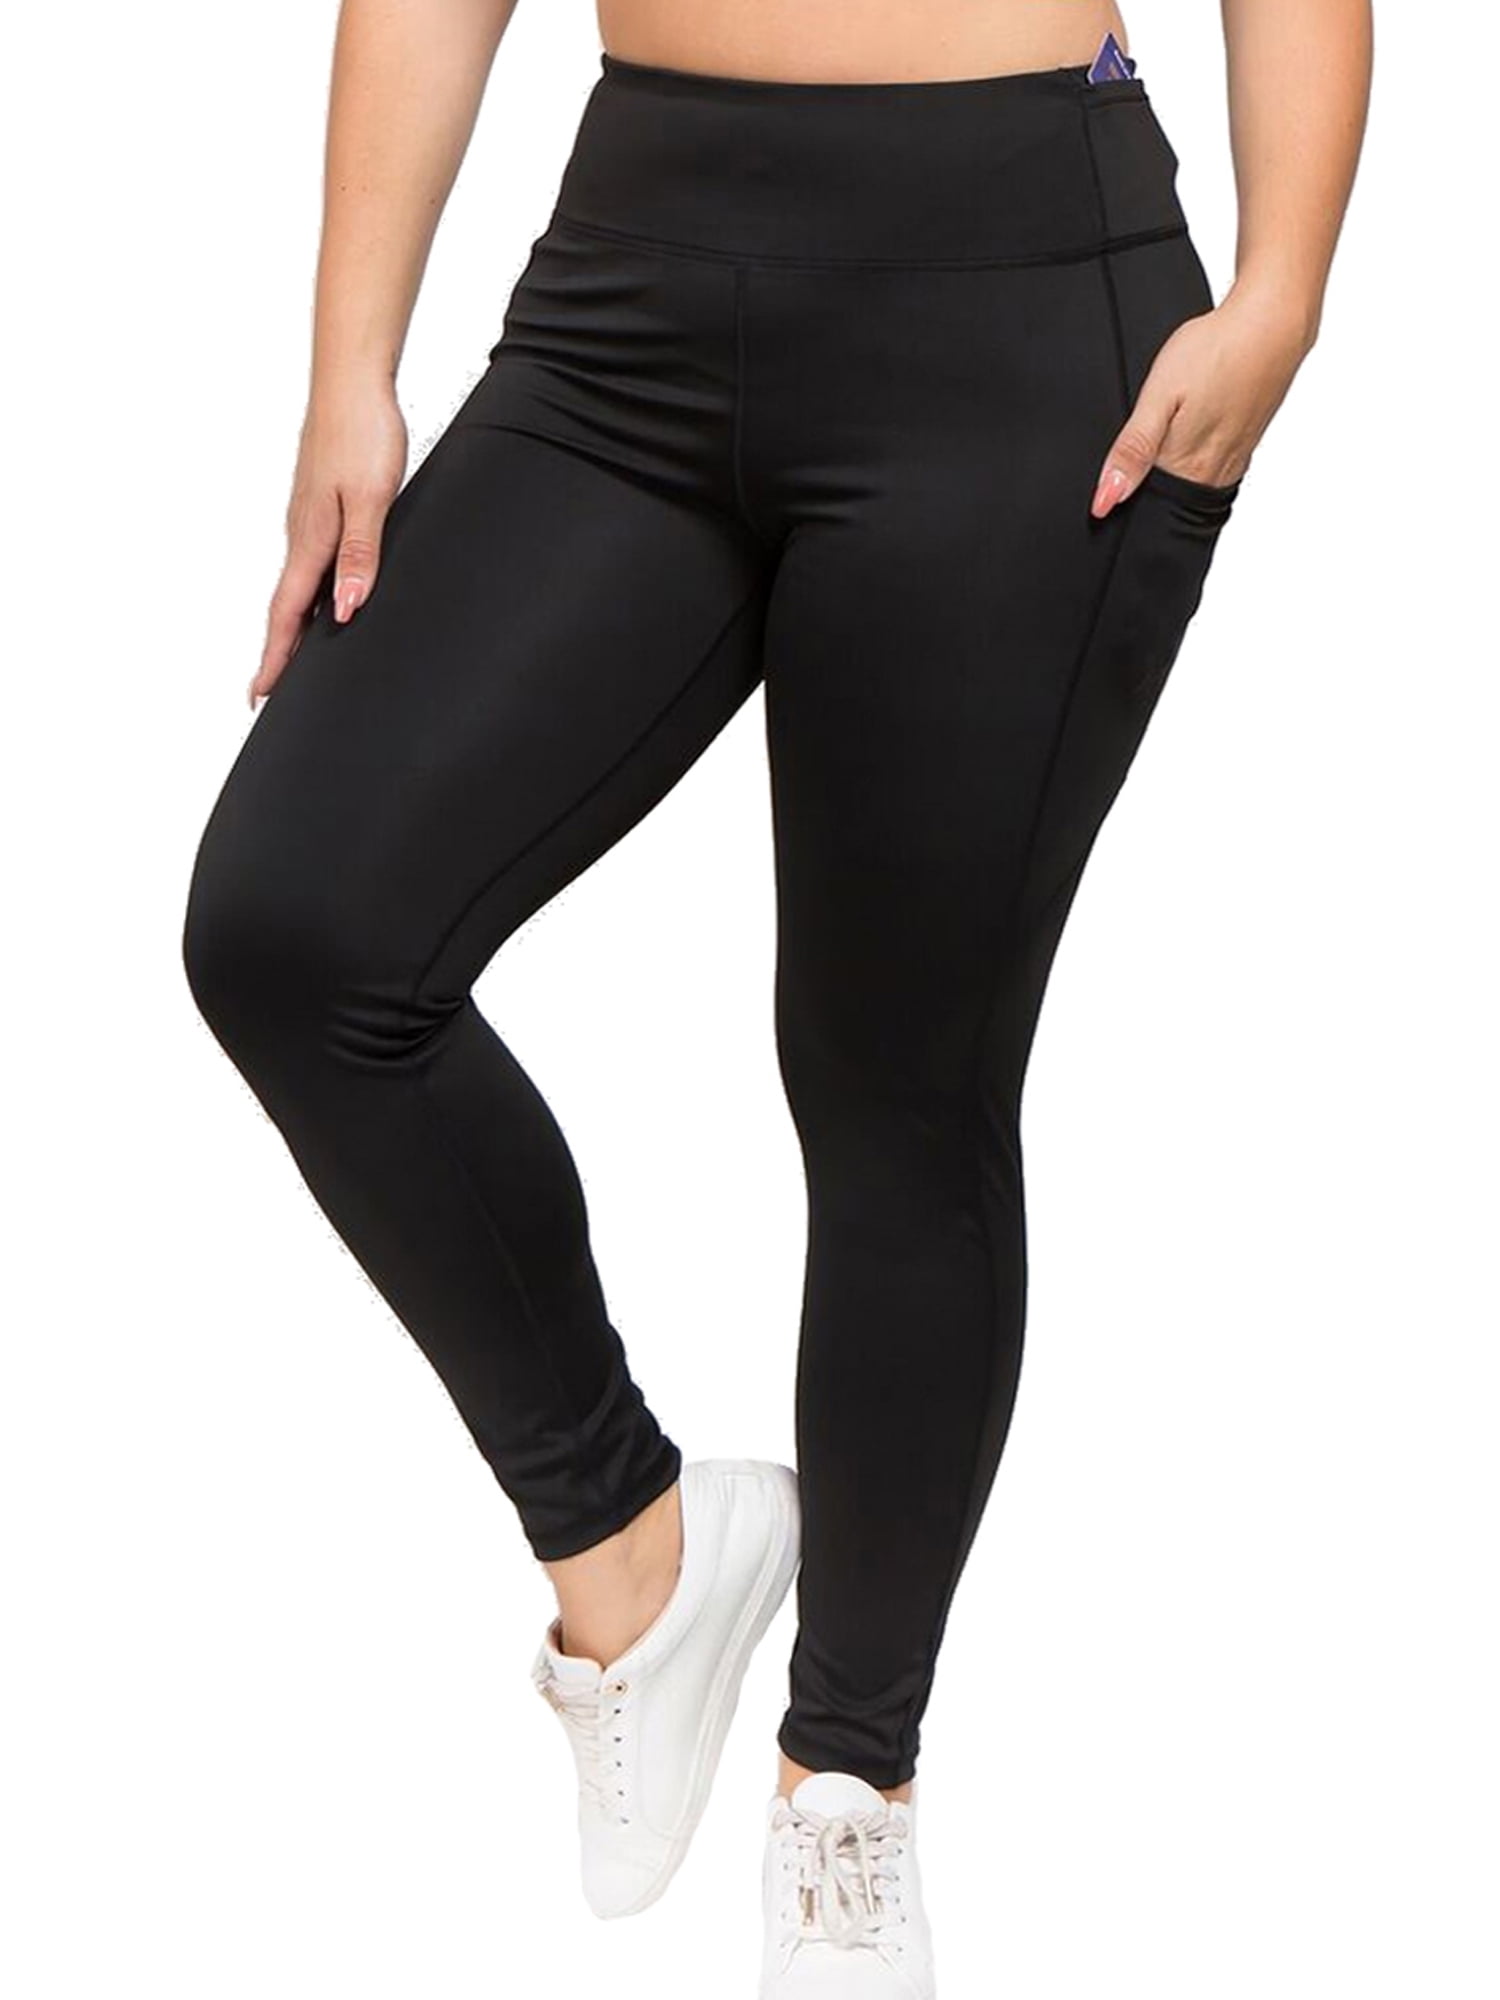 tunge niece Surrey Black Plus Size High Waist Activewear Leggings With Pockets Size X-Large -  Walmart.com